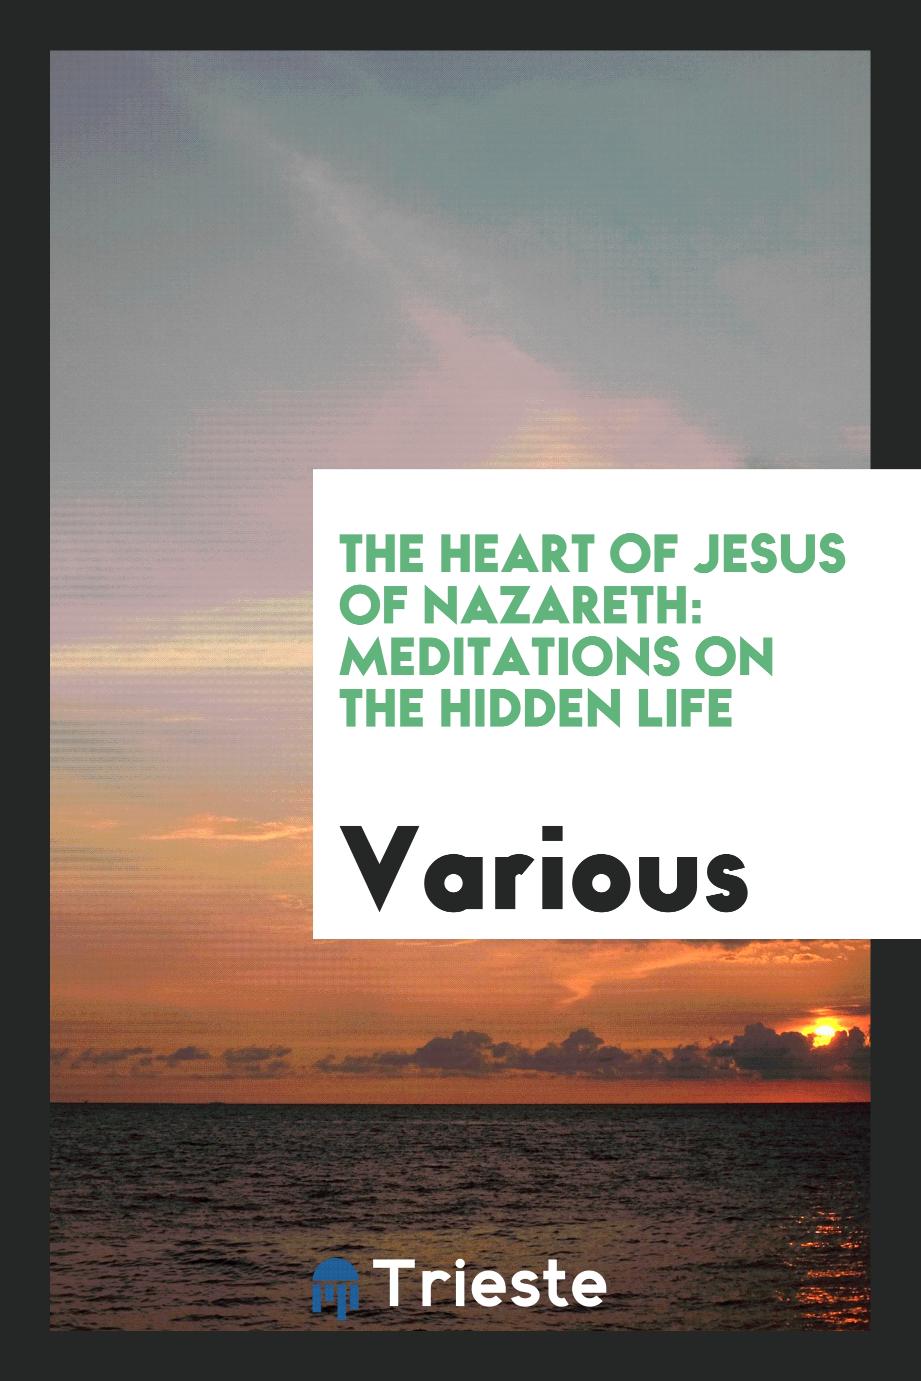 The heart of Jesus of Nazareth: meditations on the hidden life